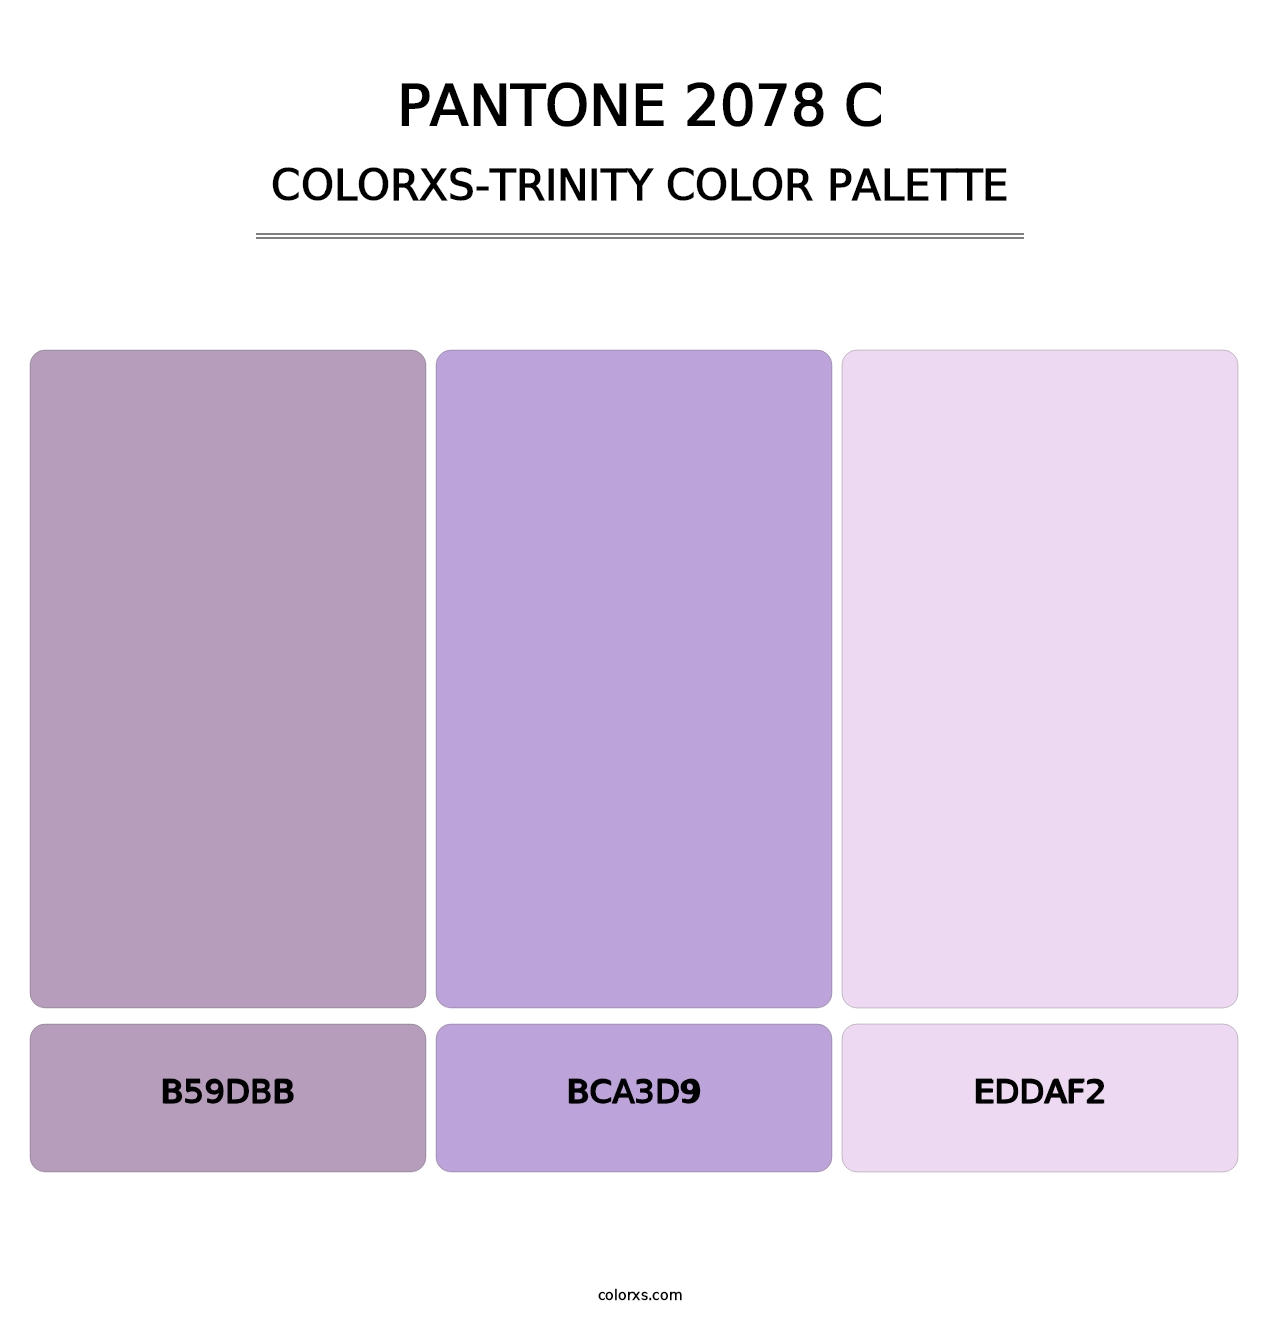 PANTONE 2078 C - Colorxs Trinity Palette